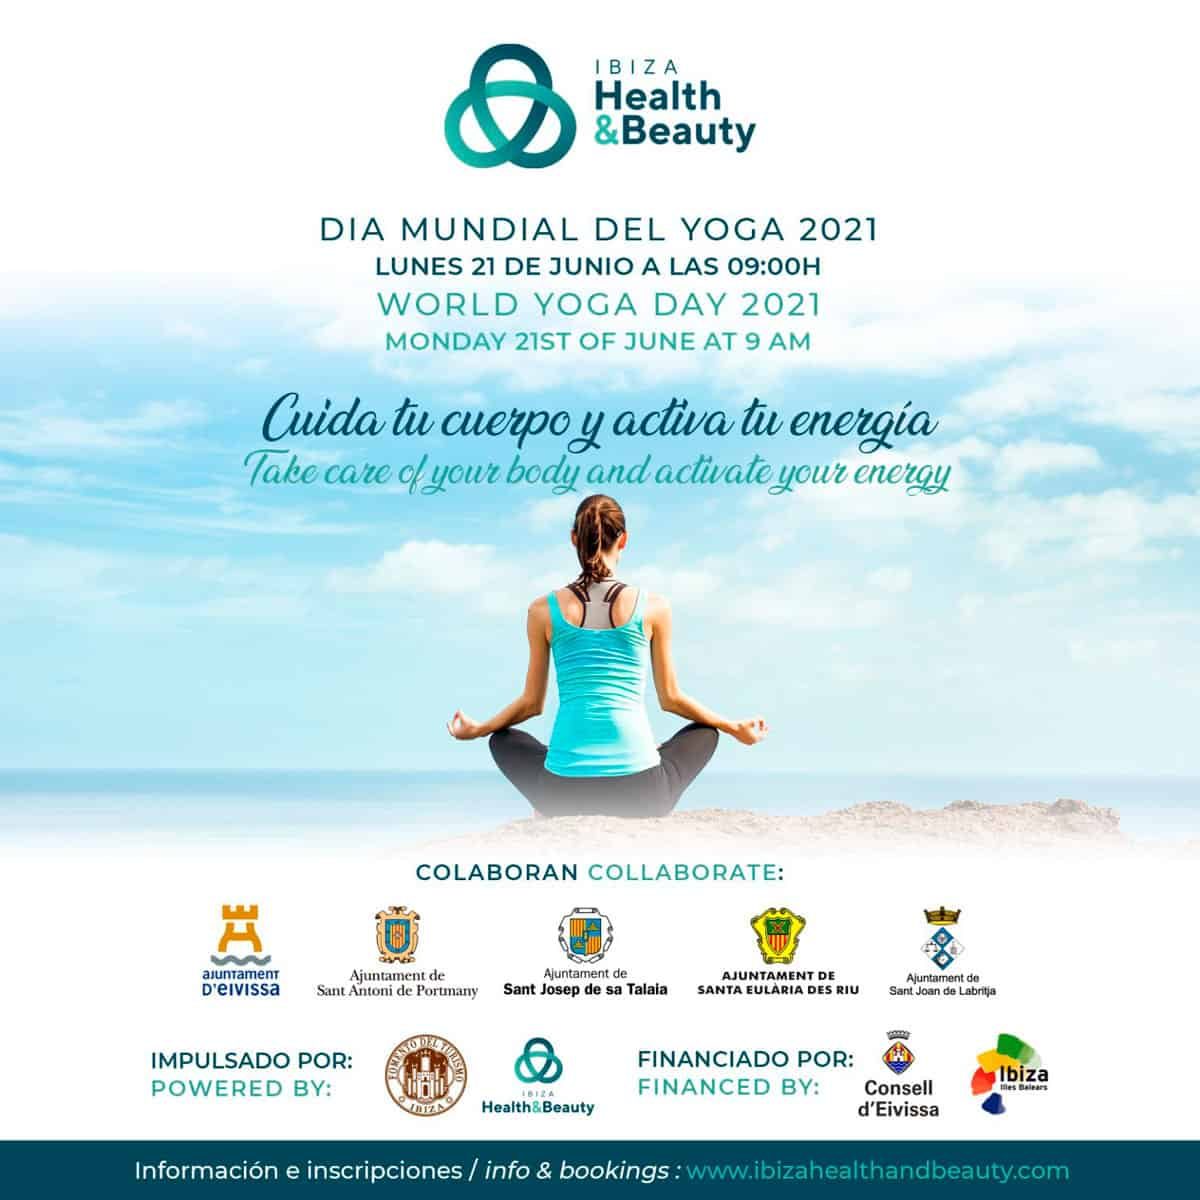 dia-mundial-del-yoga-ibiza-2021-welcometoibiza